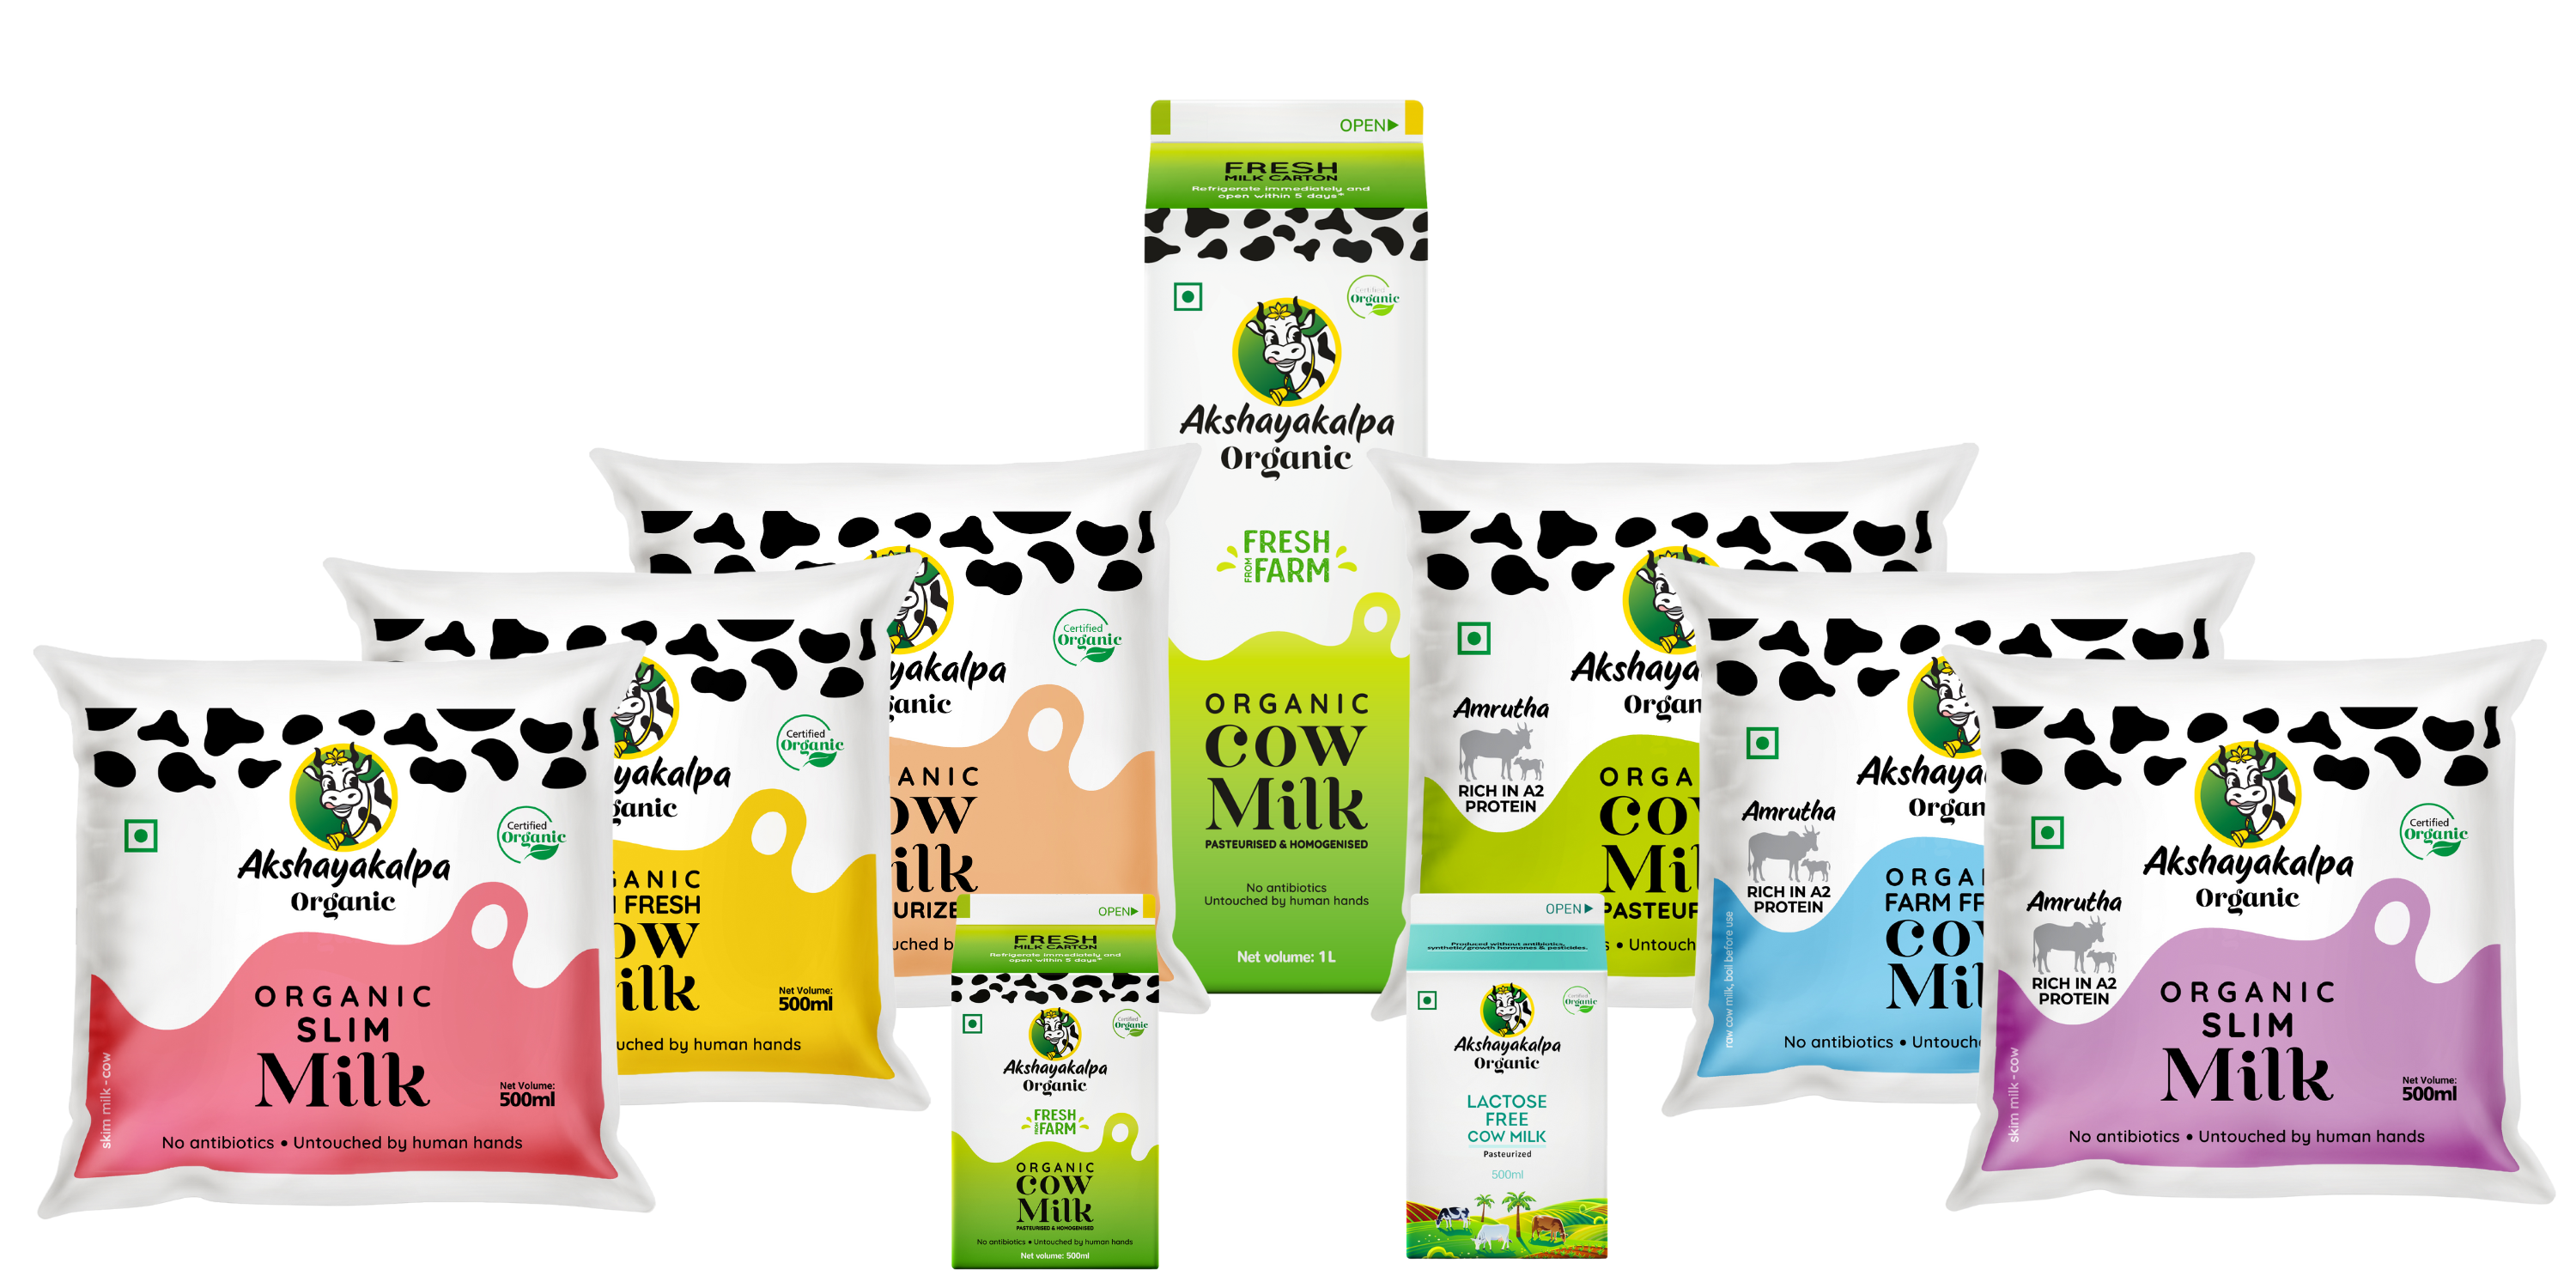 Different choices available in Akshayakalpa organic milk